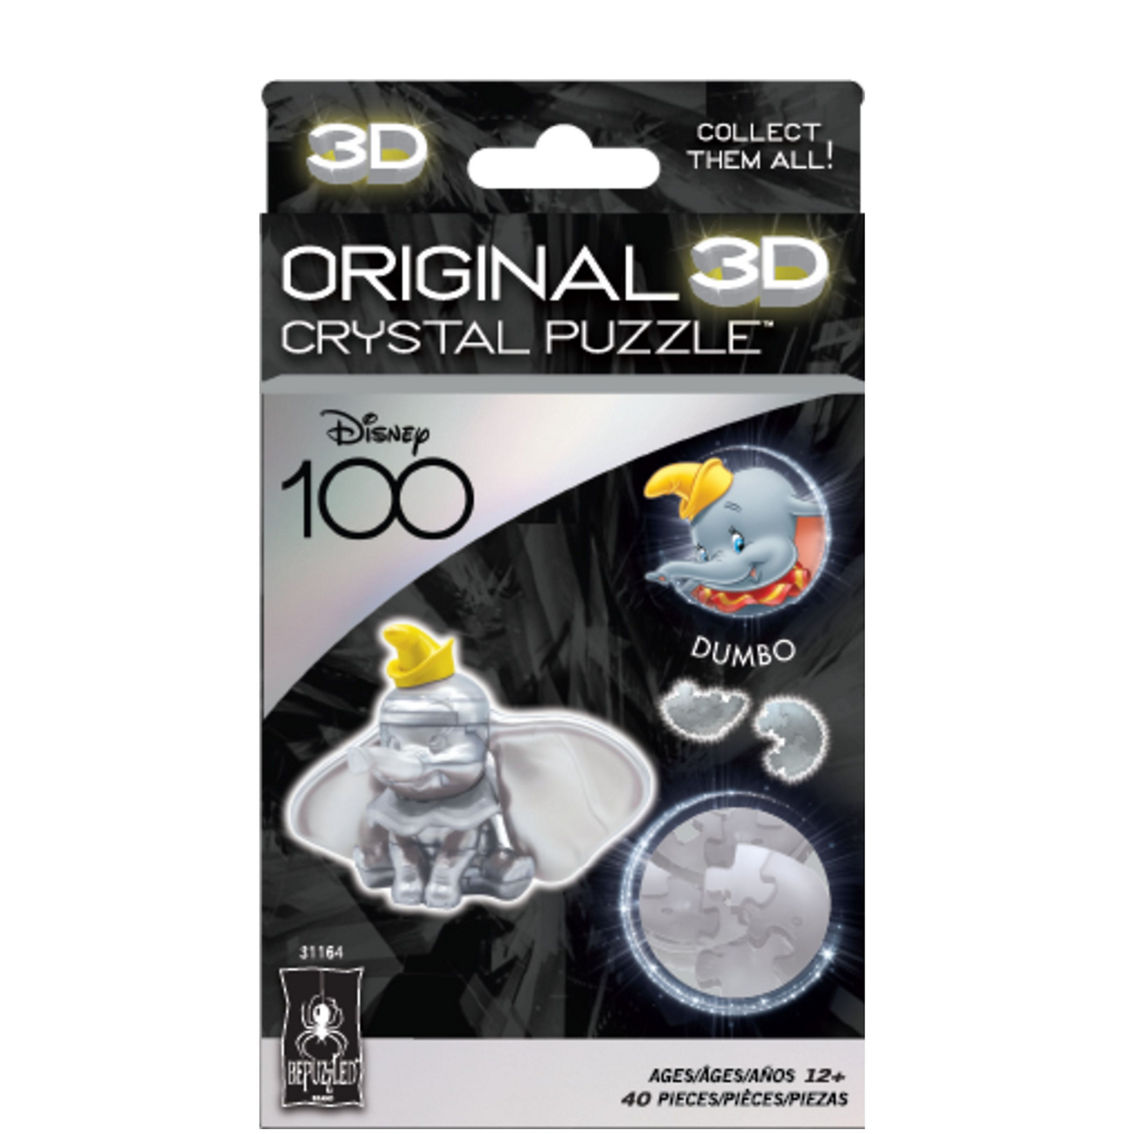 BePuzzled 3D Crystal Puzzle - Disney 100 Platinum Edition - Dumbo: 40 Pcs - Image 3 of 5